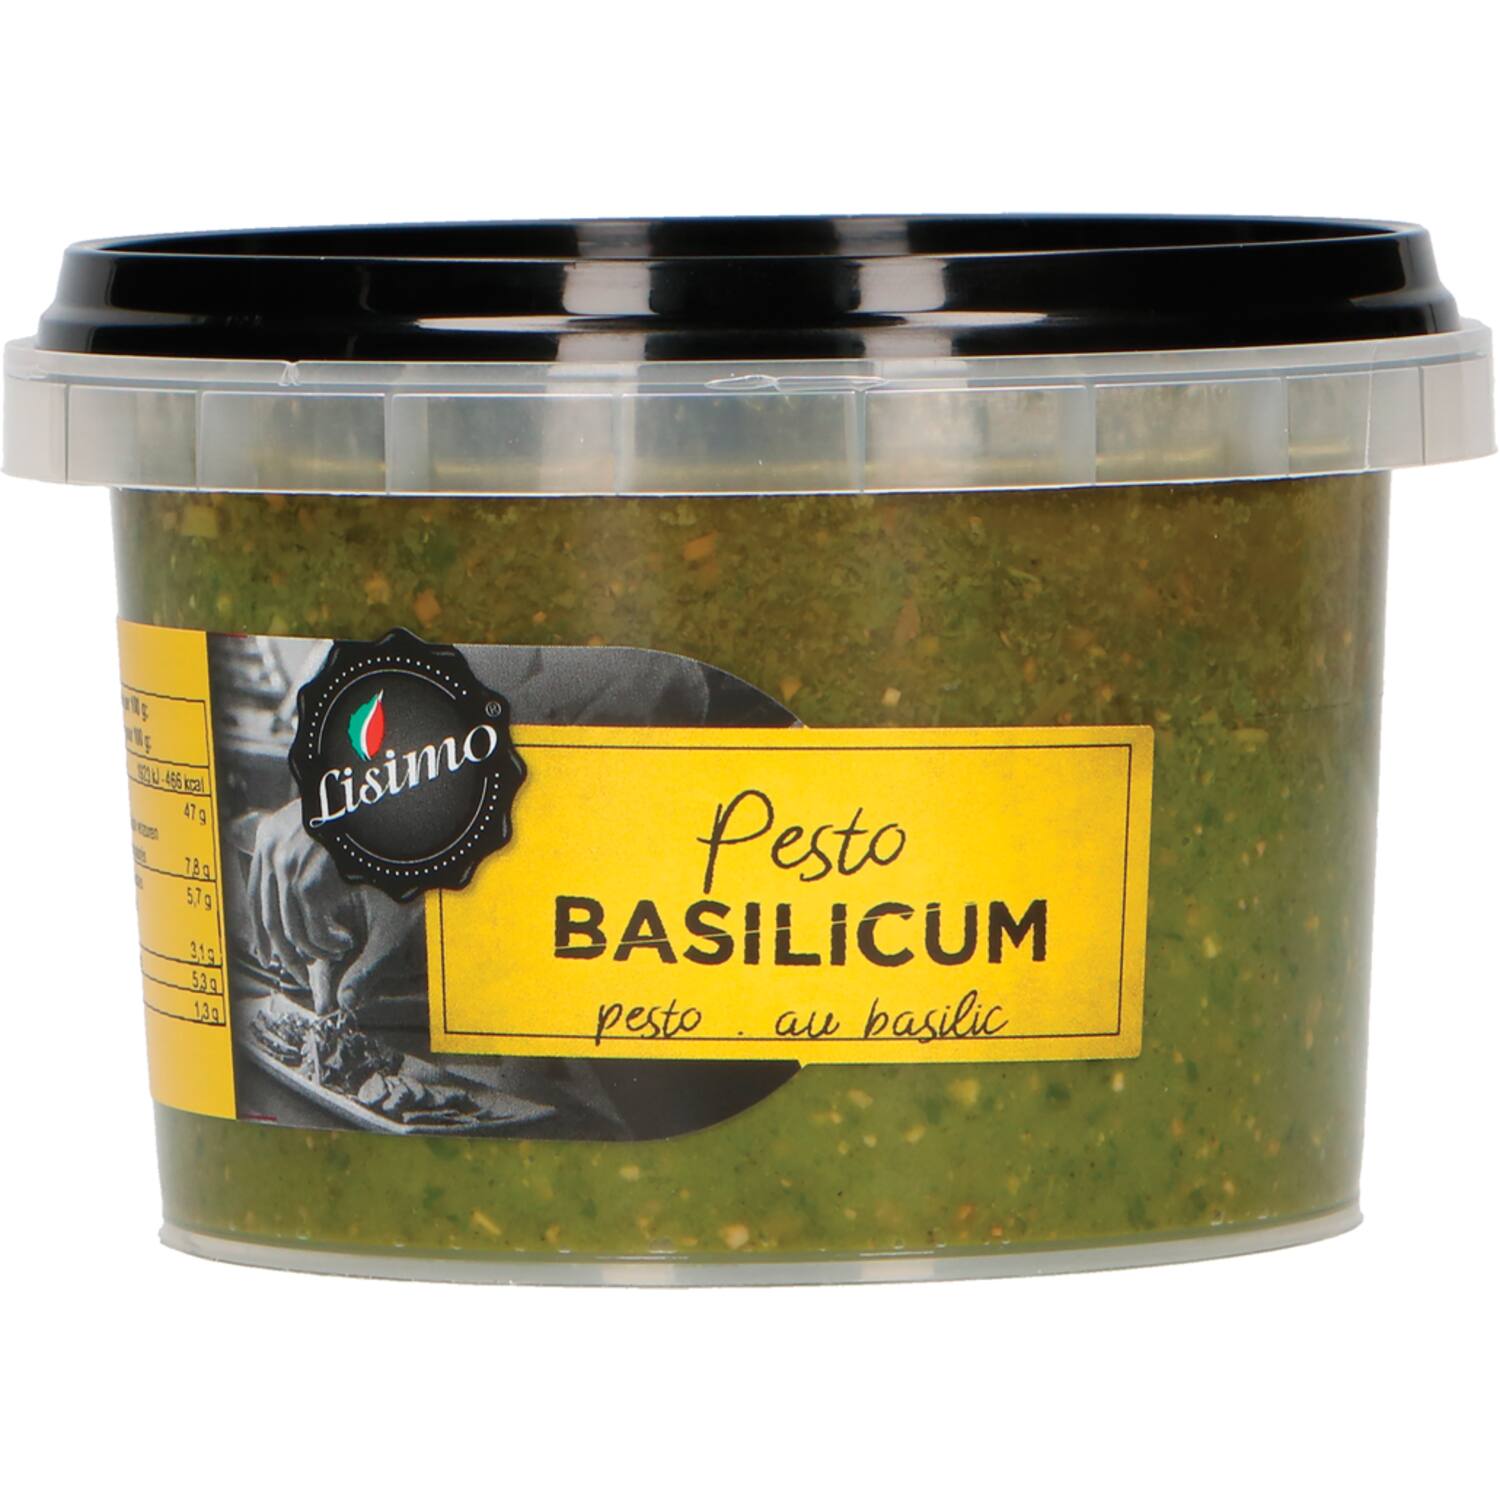 Lisimo pesto basilicum 250g (1000262), Koelvers - QSTA